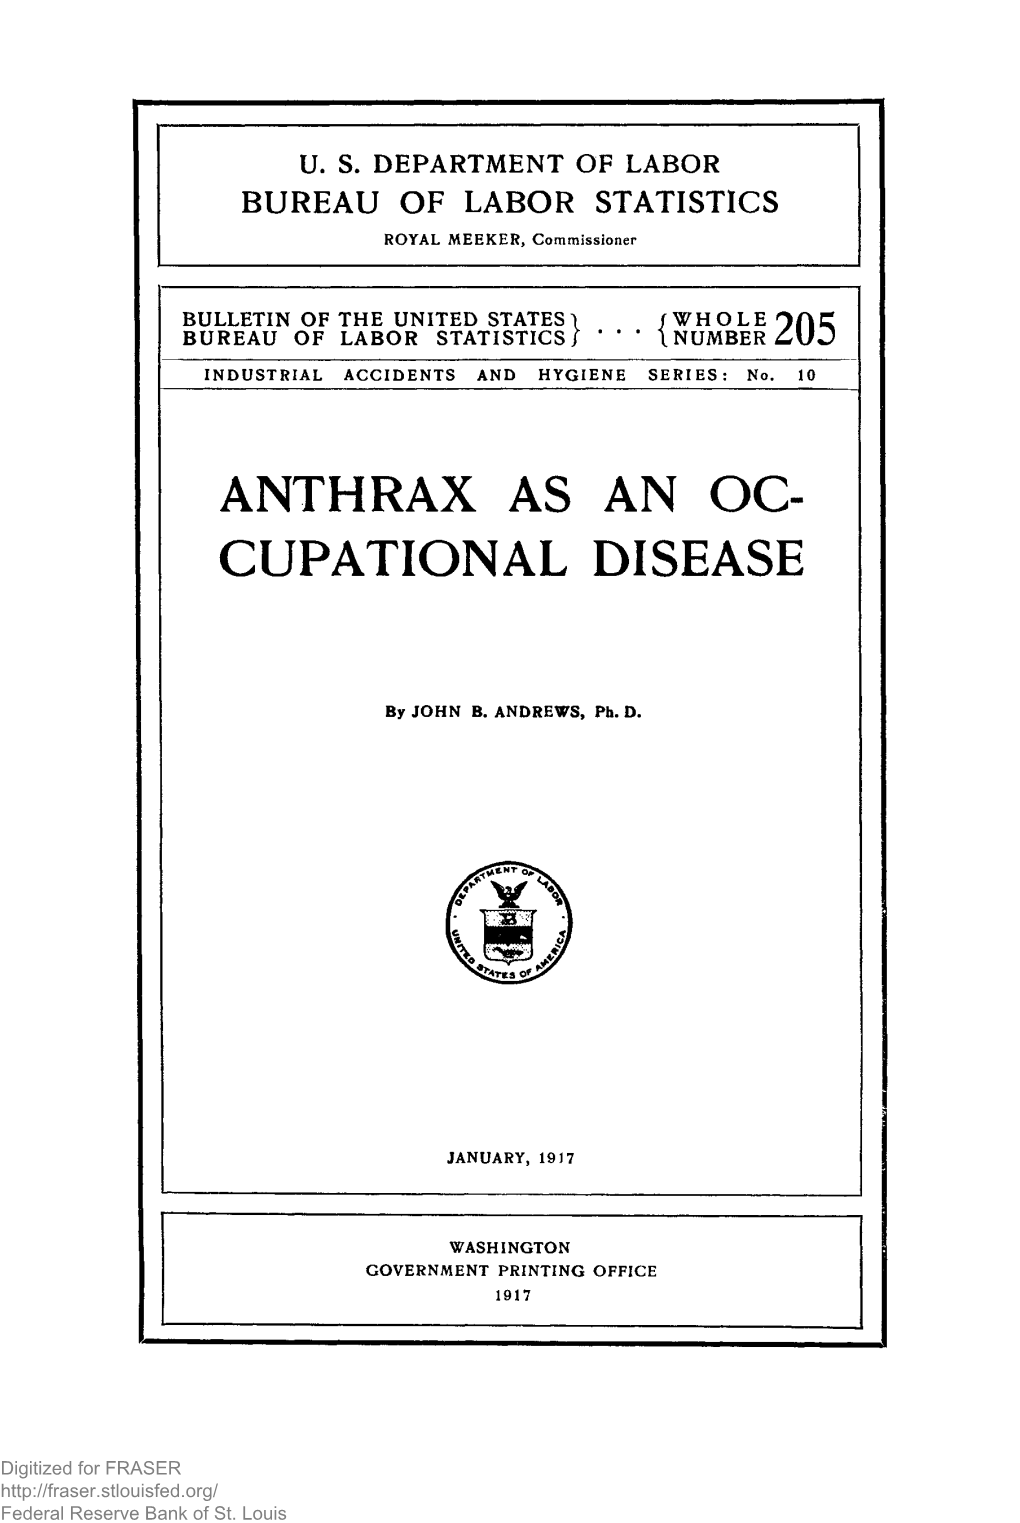 Anthrax As an Oc- Cupational Disease